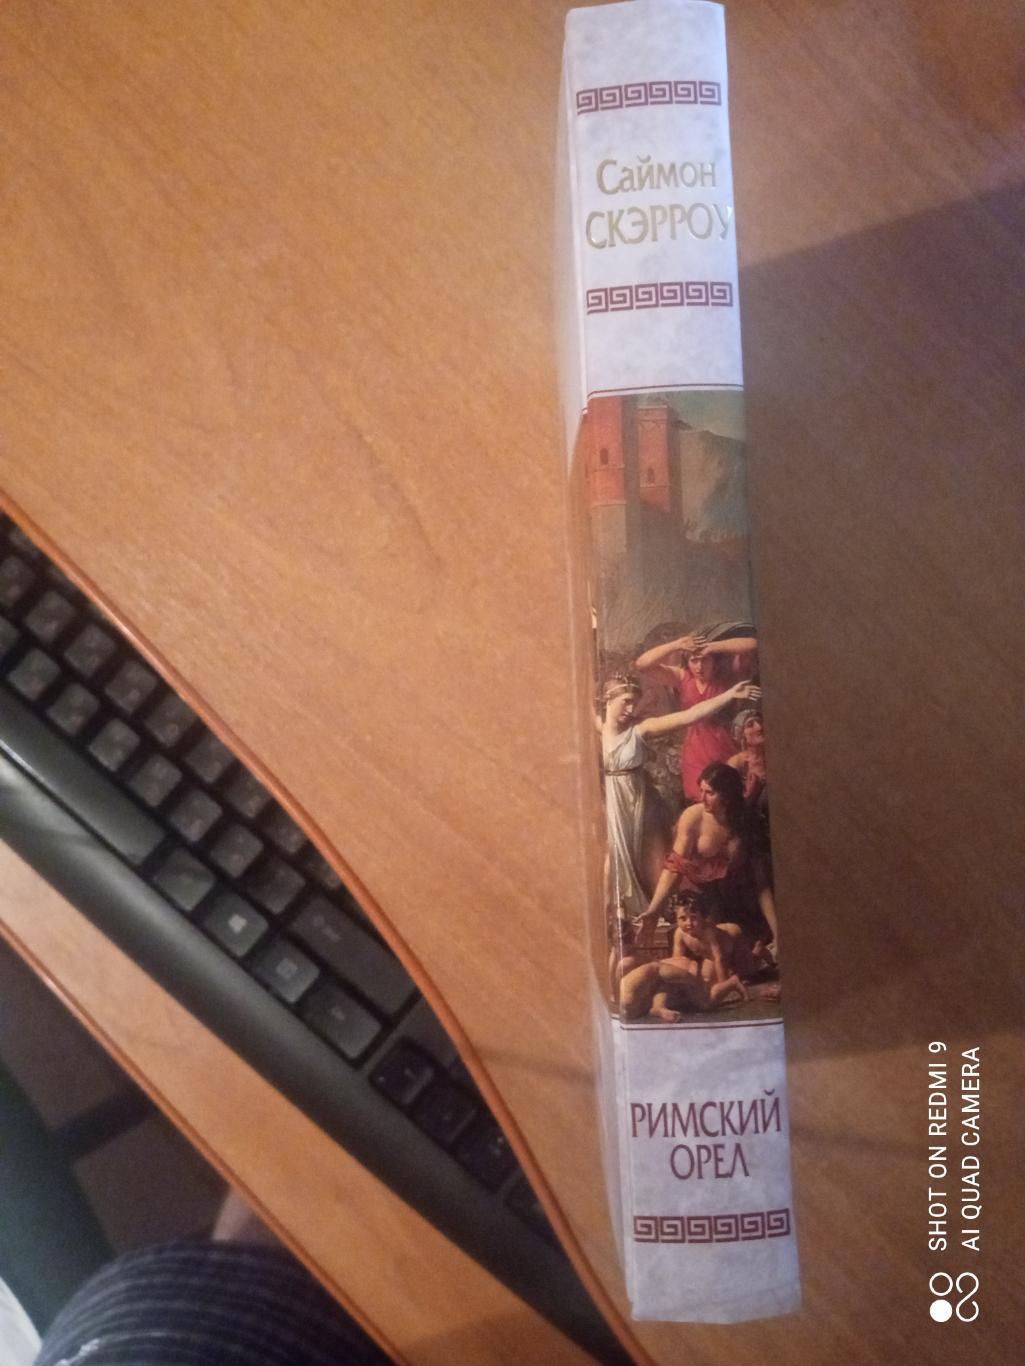 Книга: Саймон Скэрроу Римский орёл , мраморная серия. 1